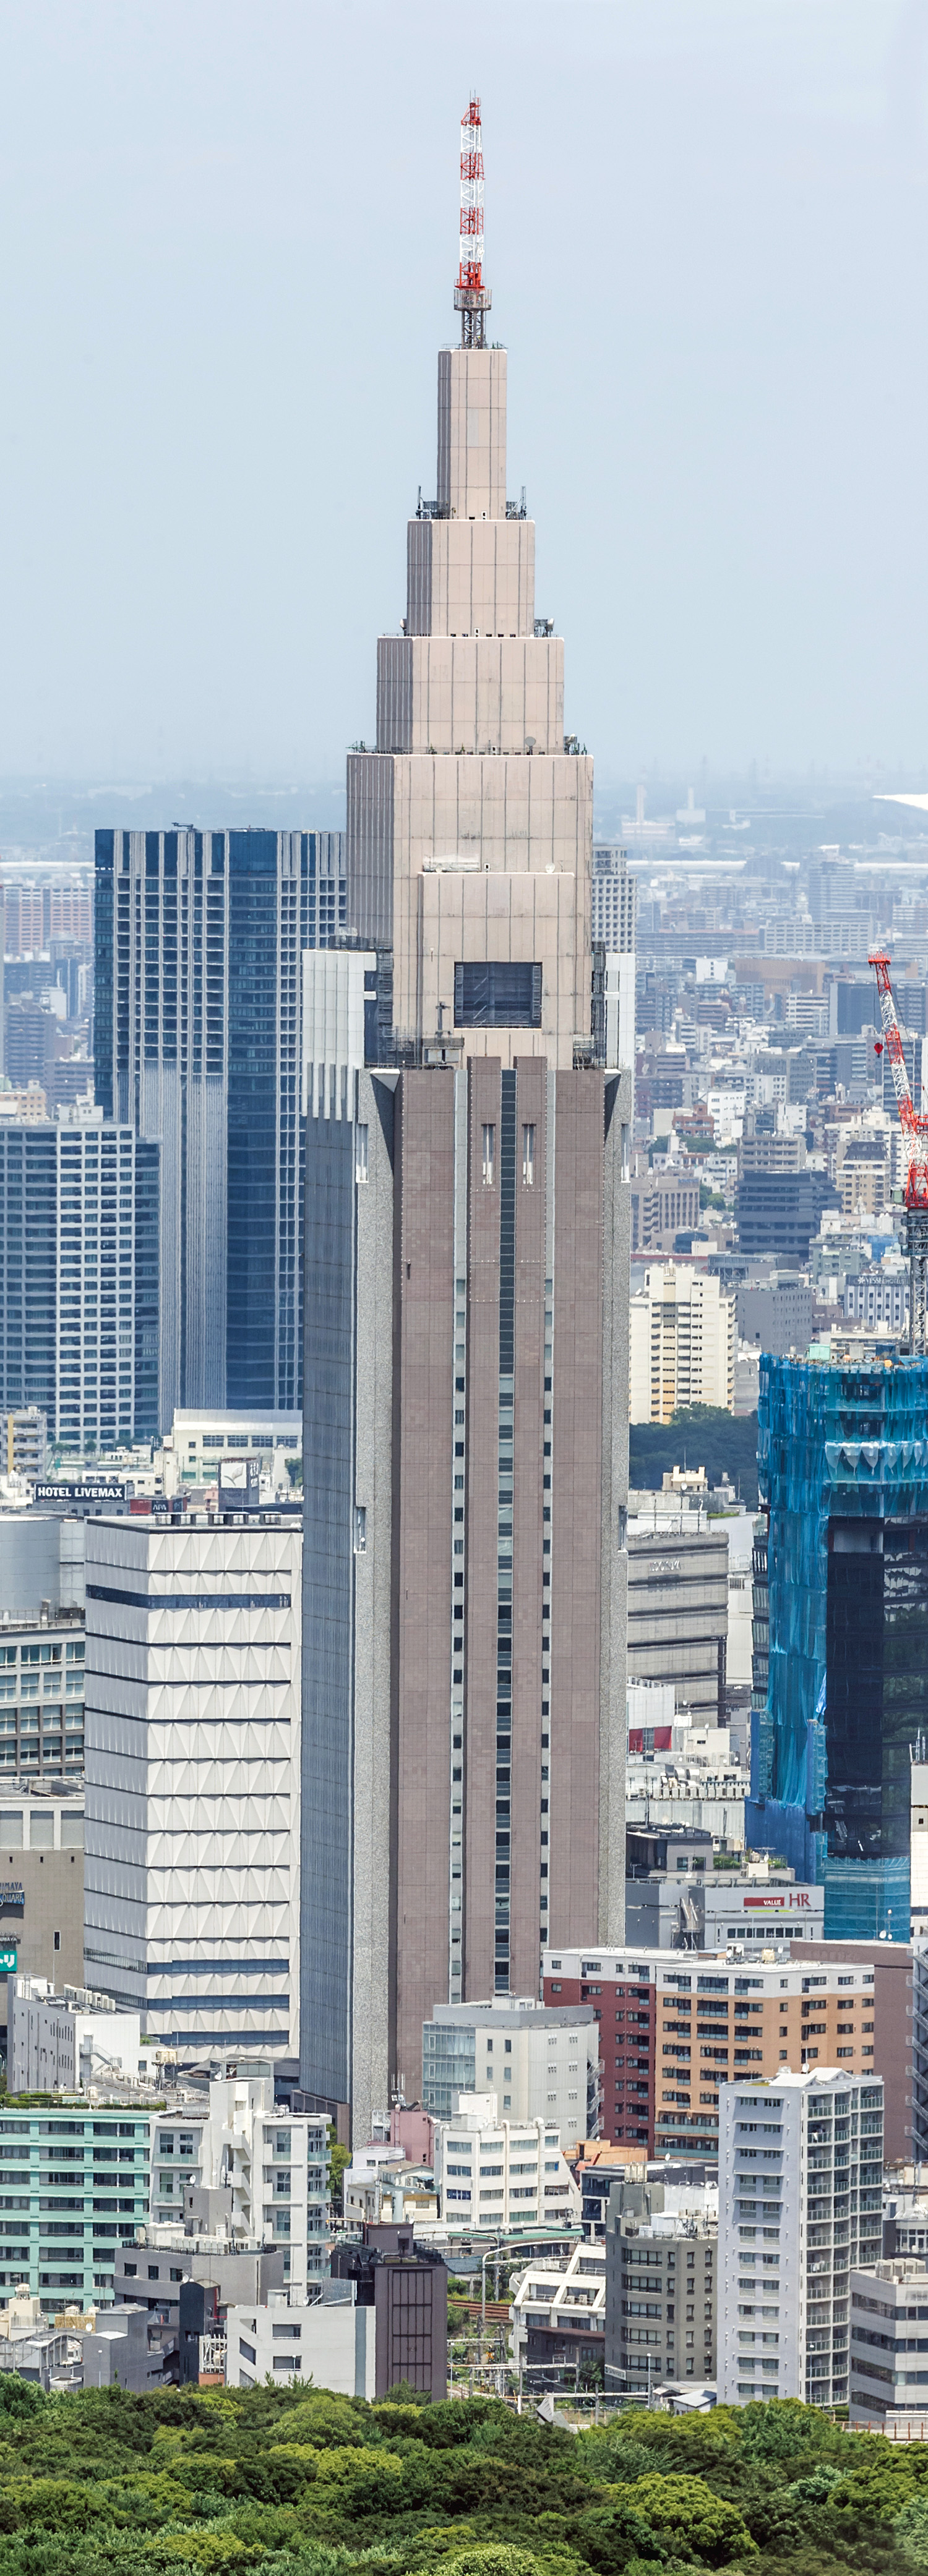 NTT DoCoMo Yoyogi Building, Tokyo - View from Shibuya Scramble Square. © Mathias Beinling